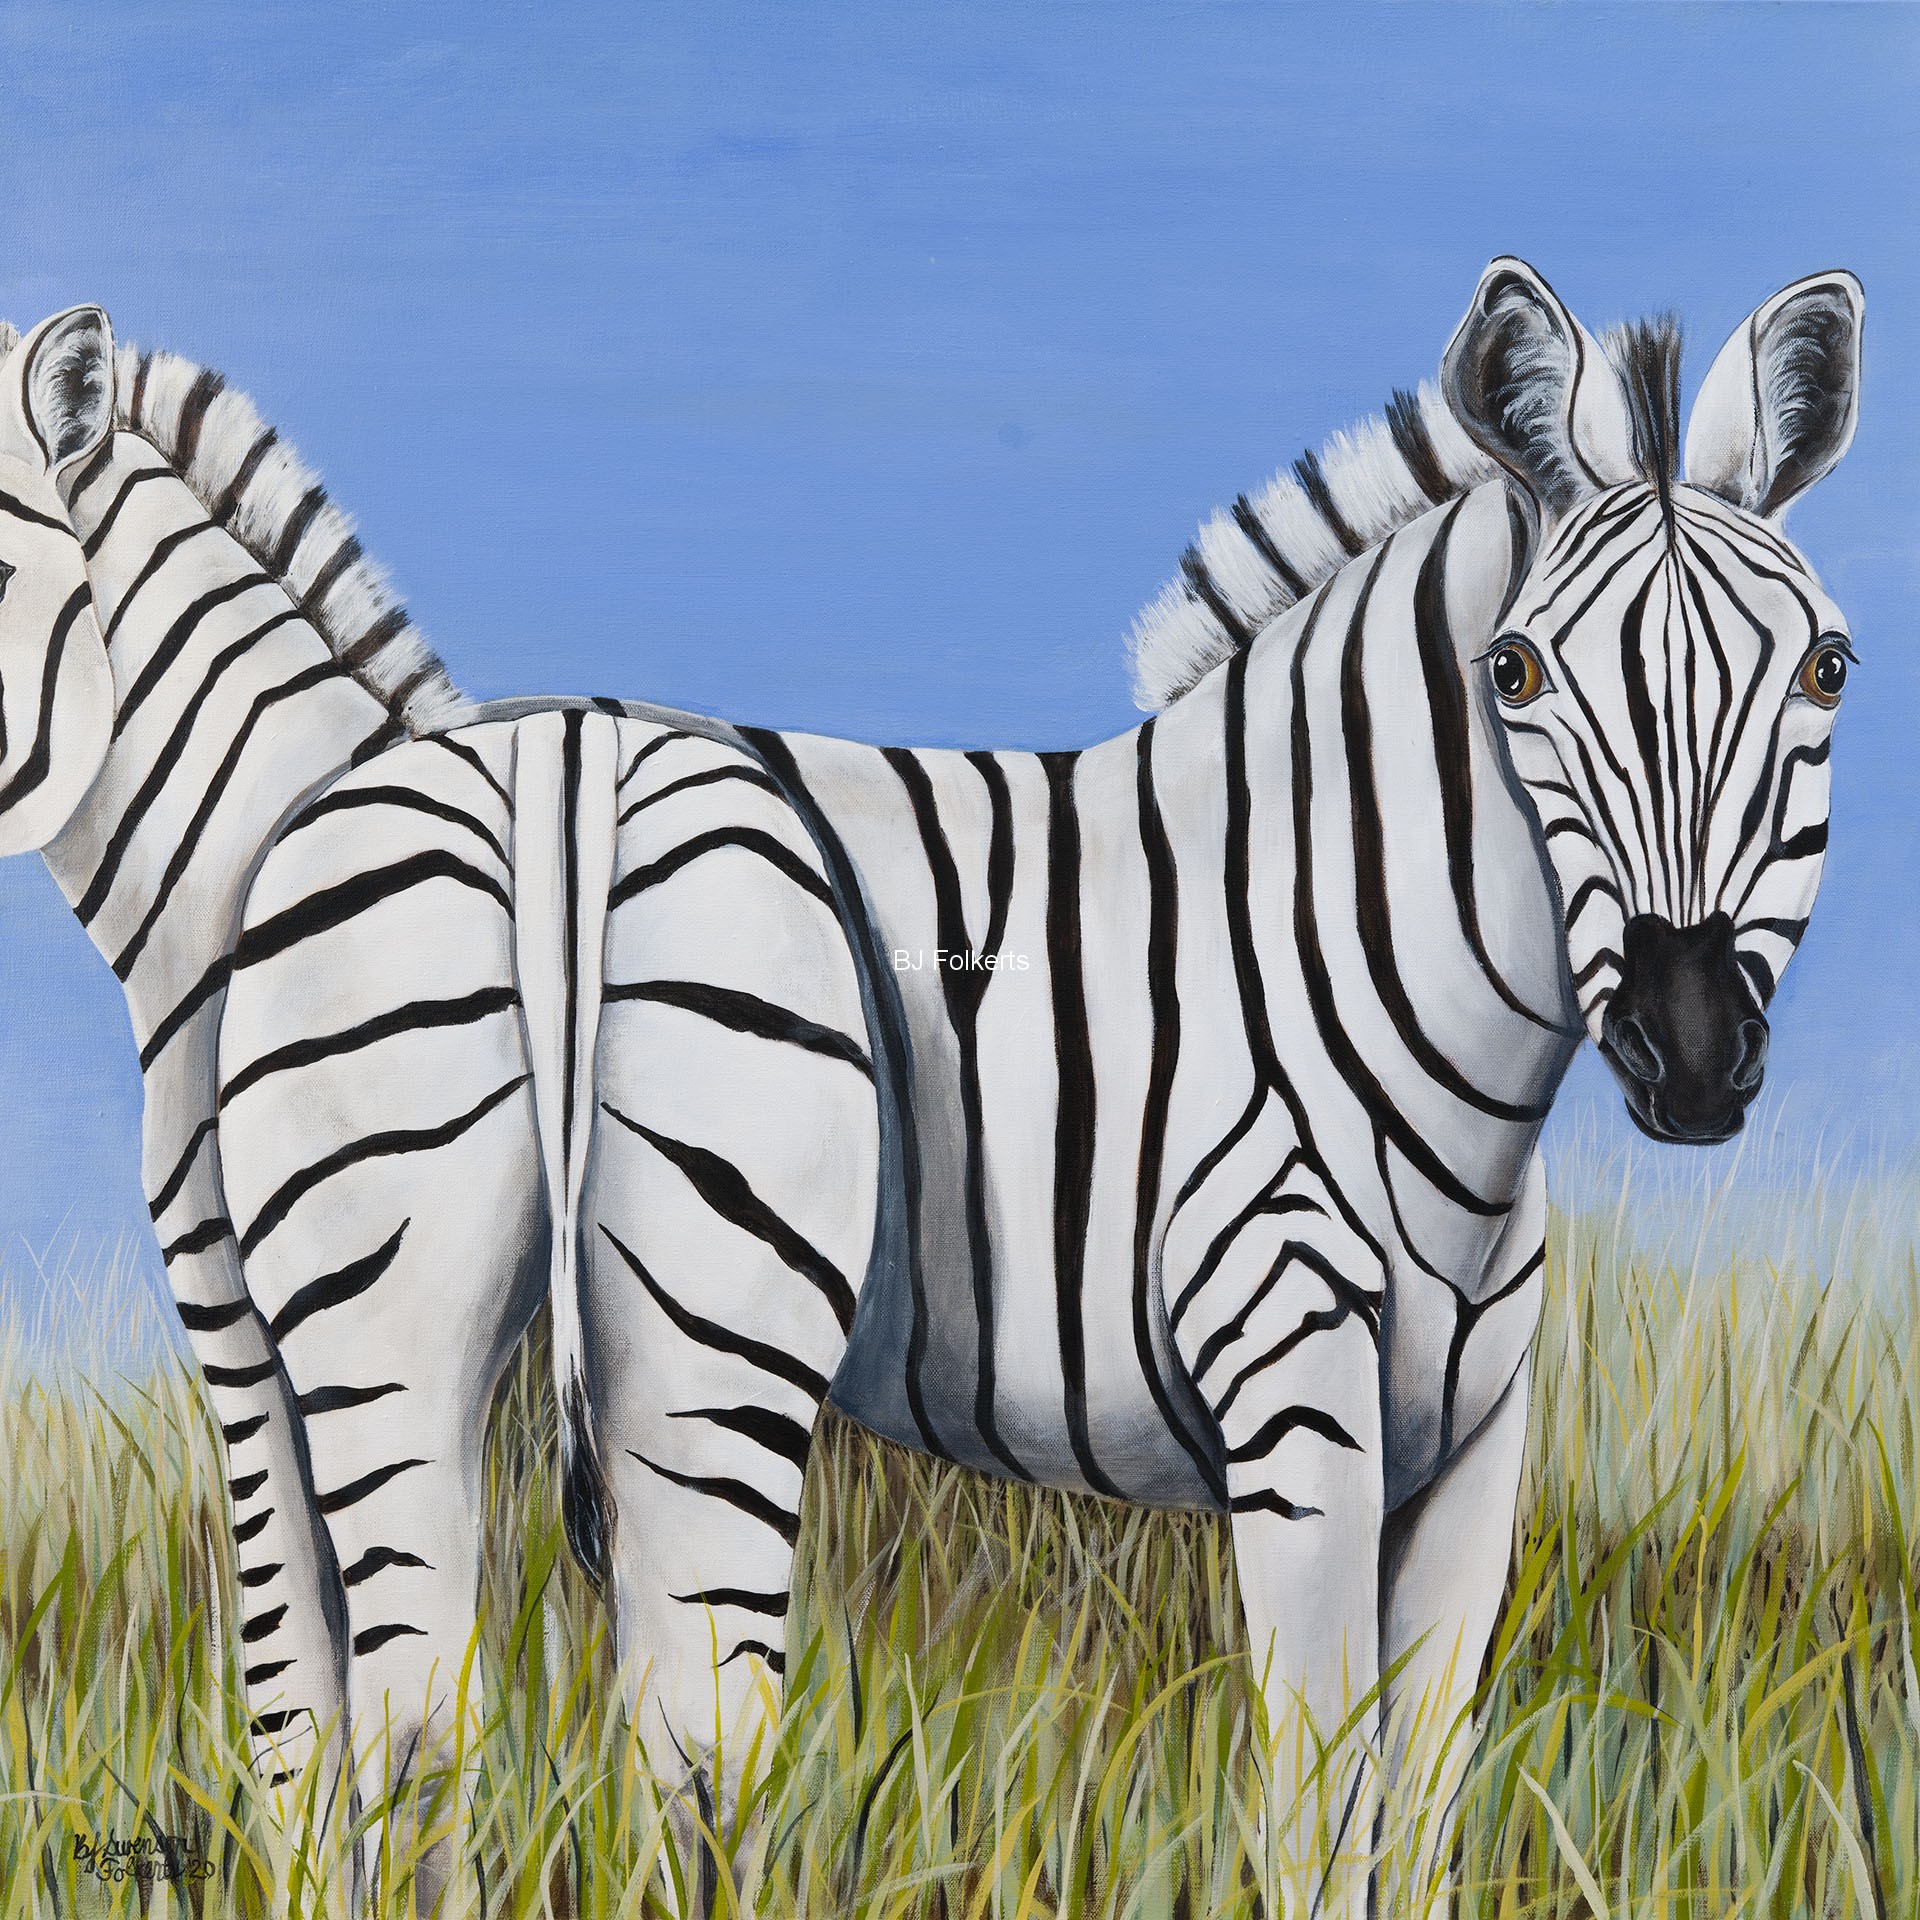 zebra pair